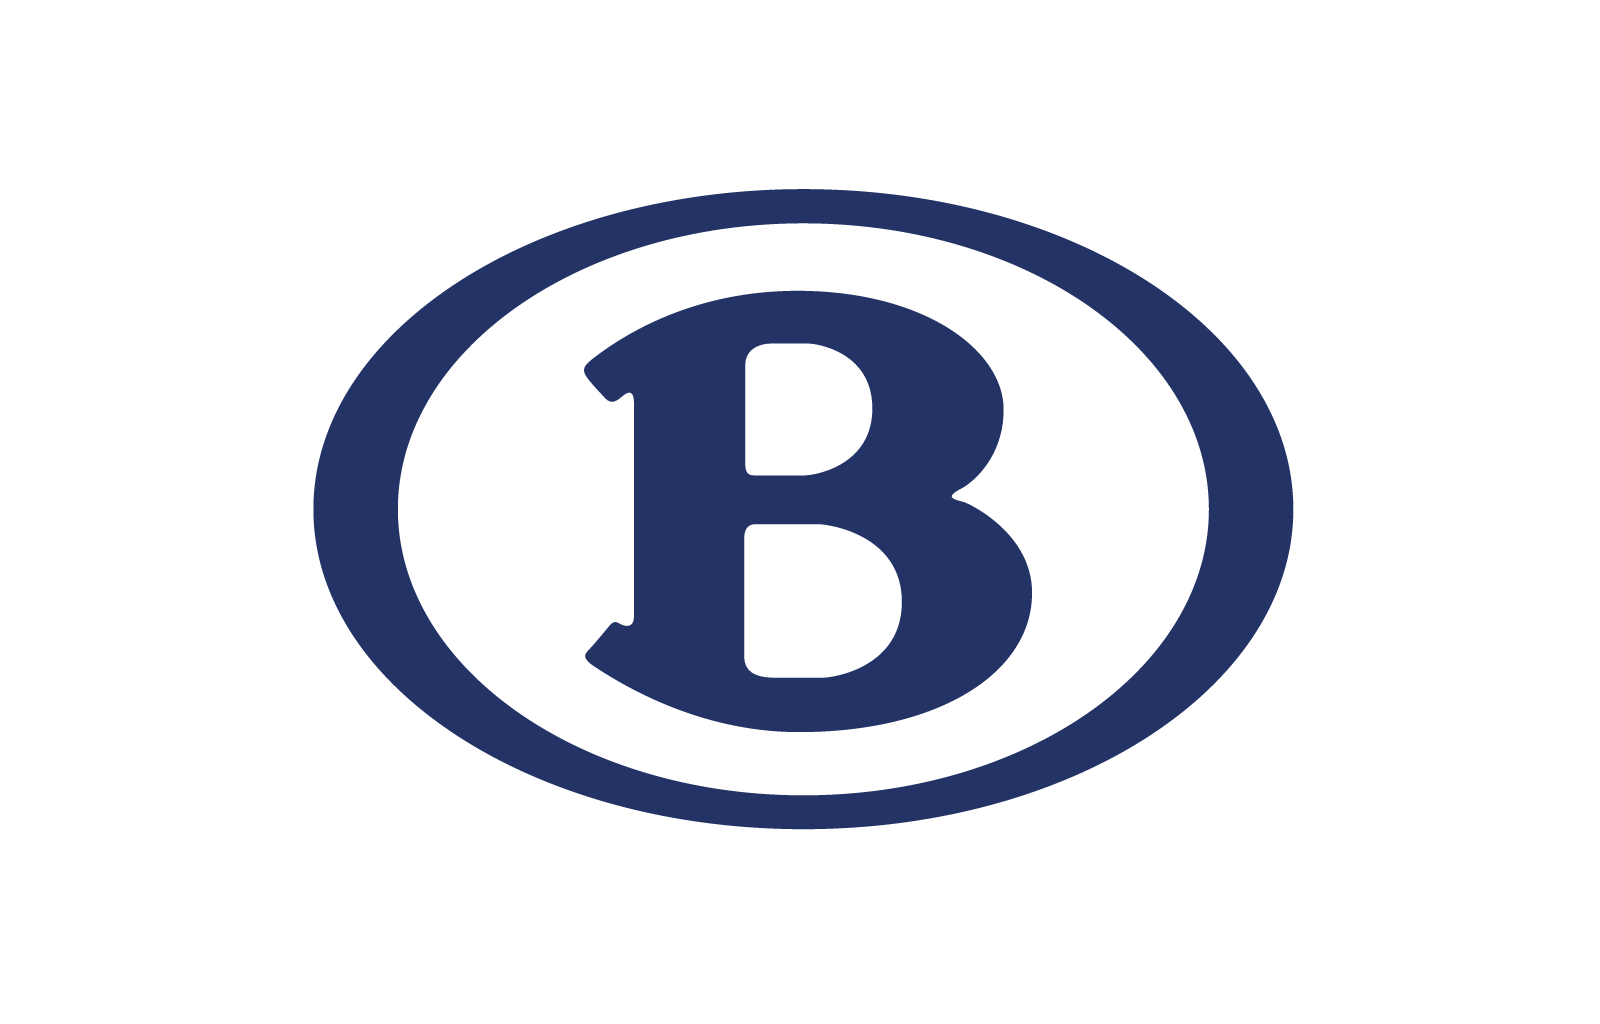 B in Circle Logo - Corporate Identities of European railway companies | retours